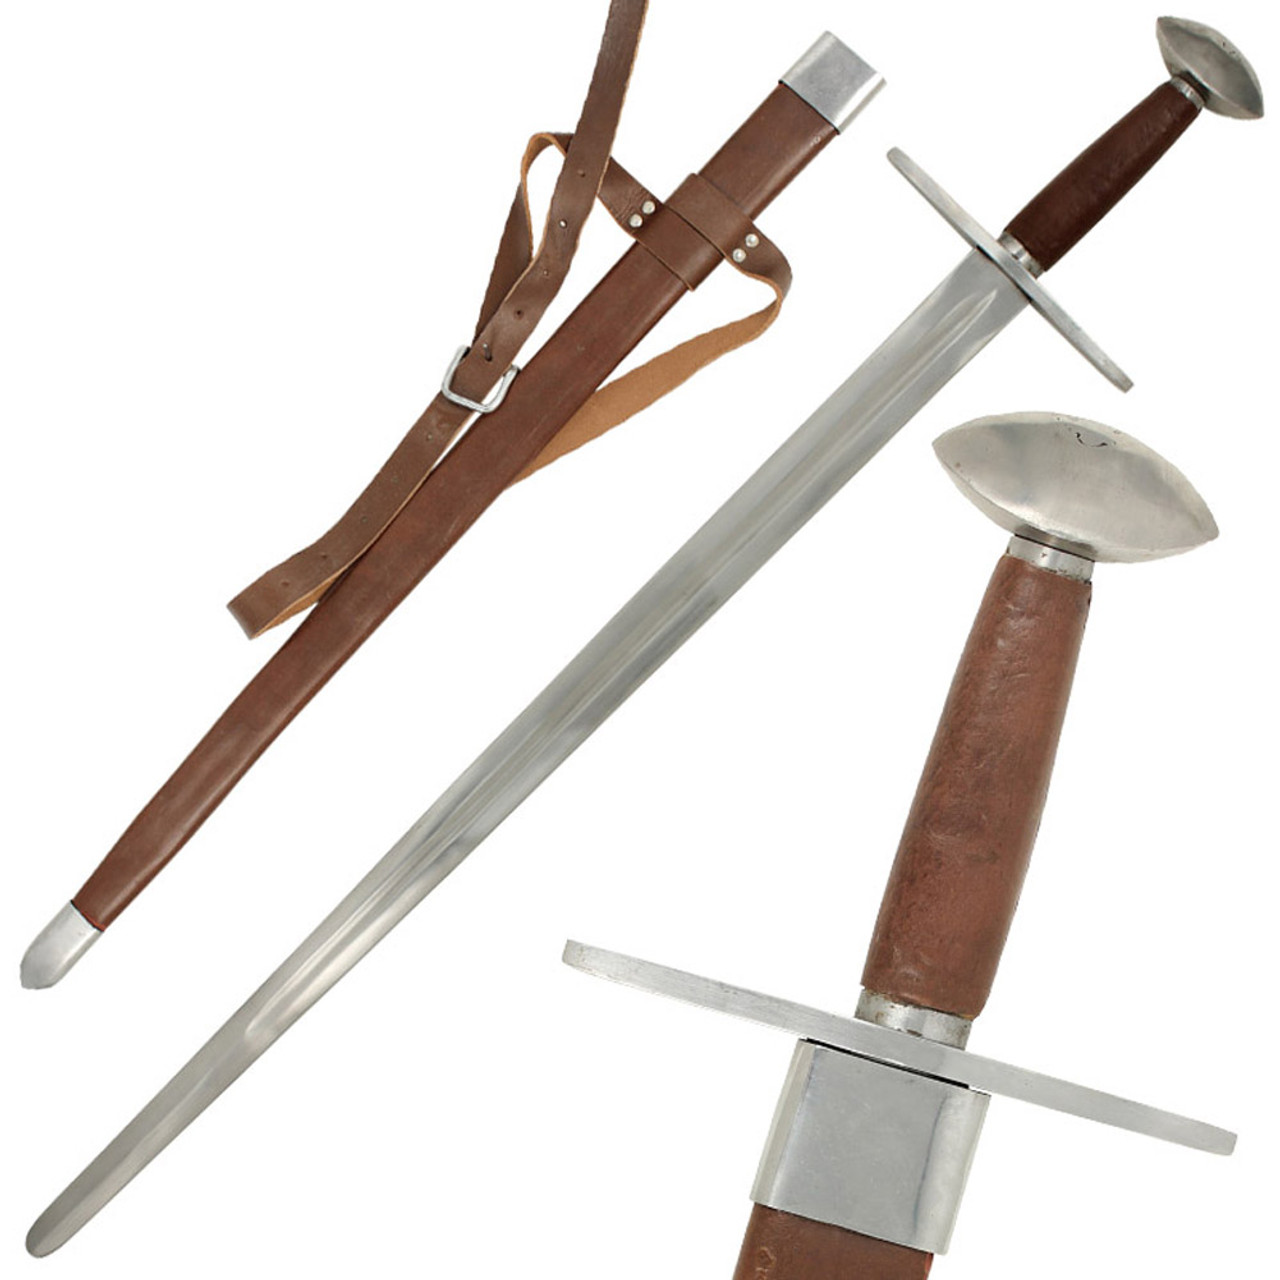 Buy Battle Ready Swords Handmade Swords Buy Knives And Swords Cheap